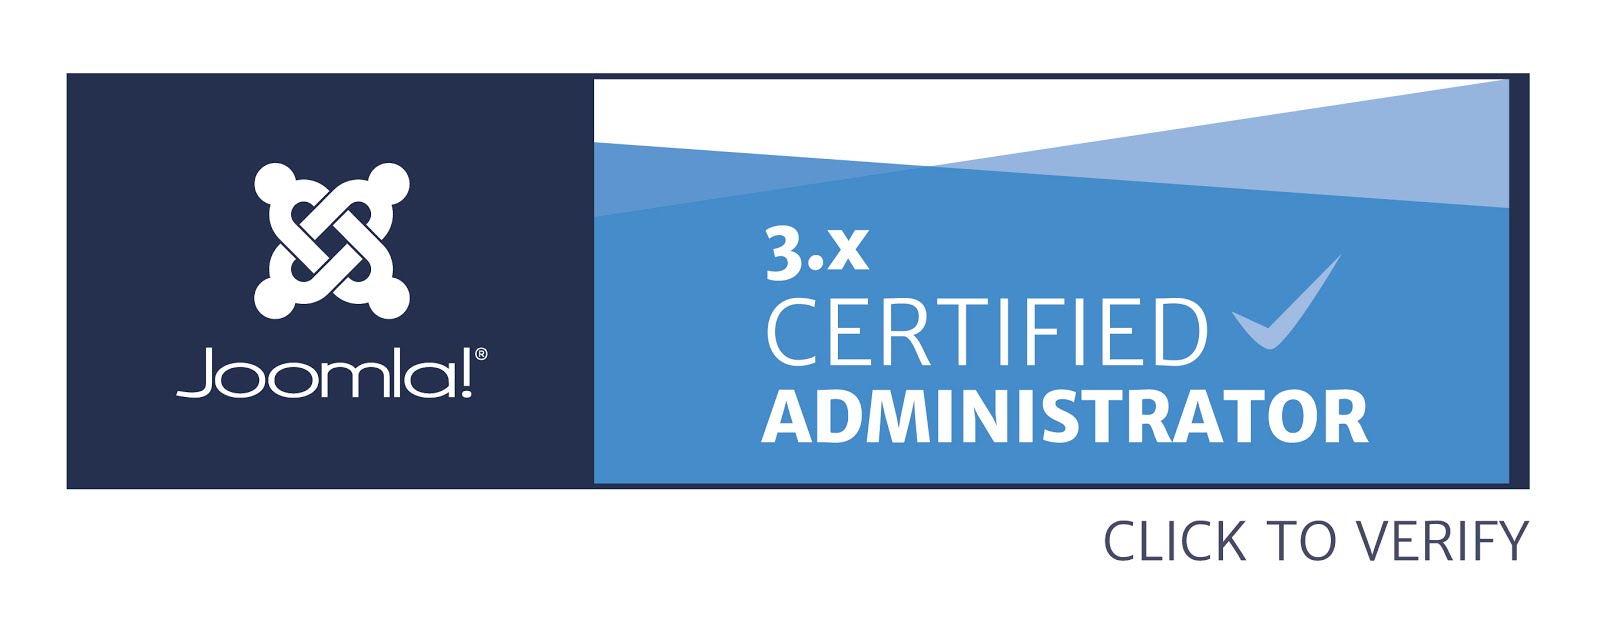 Joomla! 3.x Certified Administrator